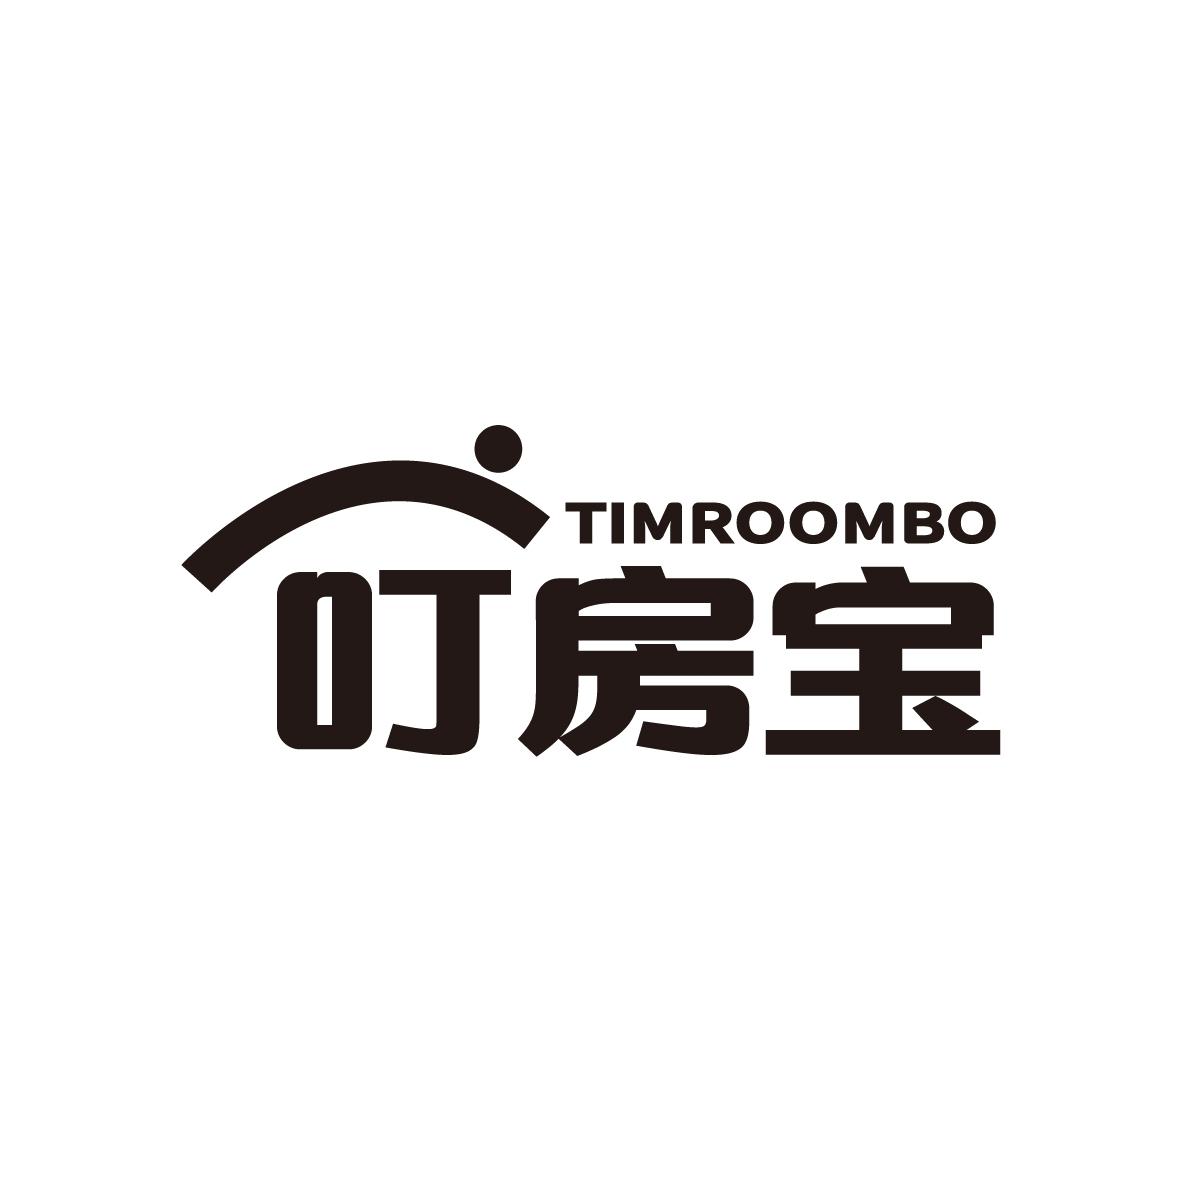  TIMROOMBO